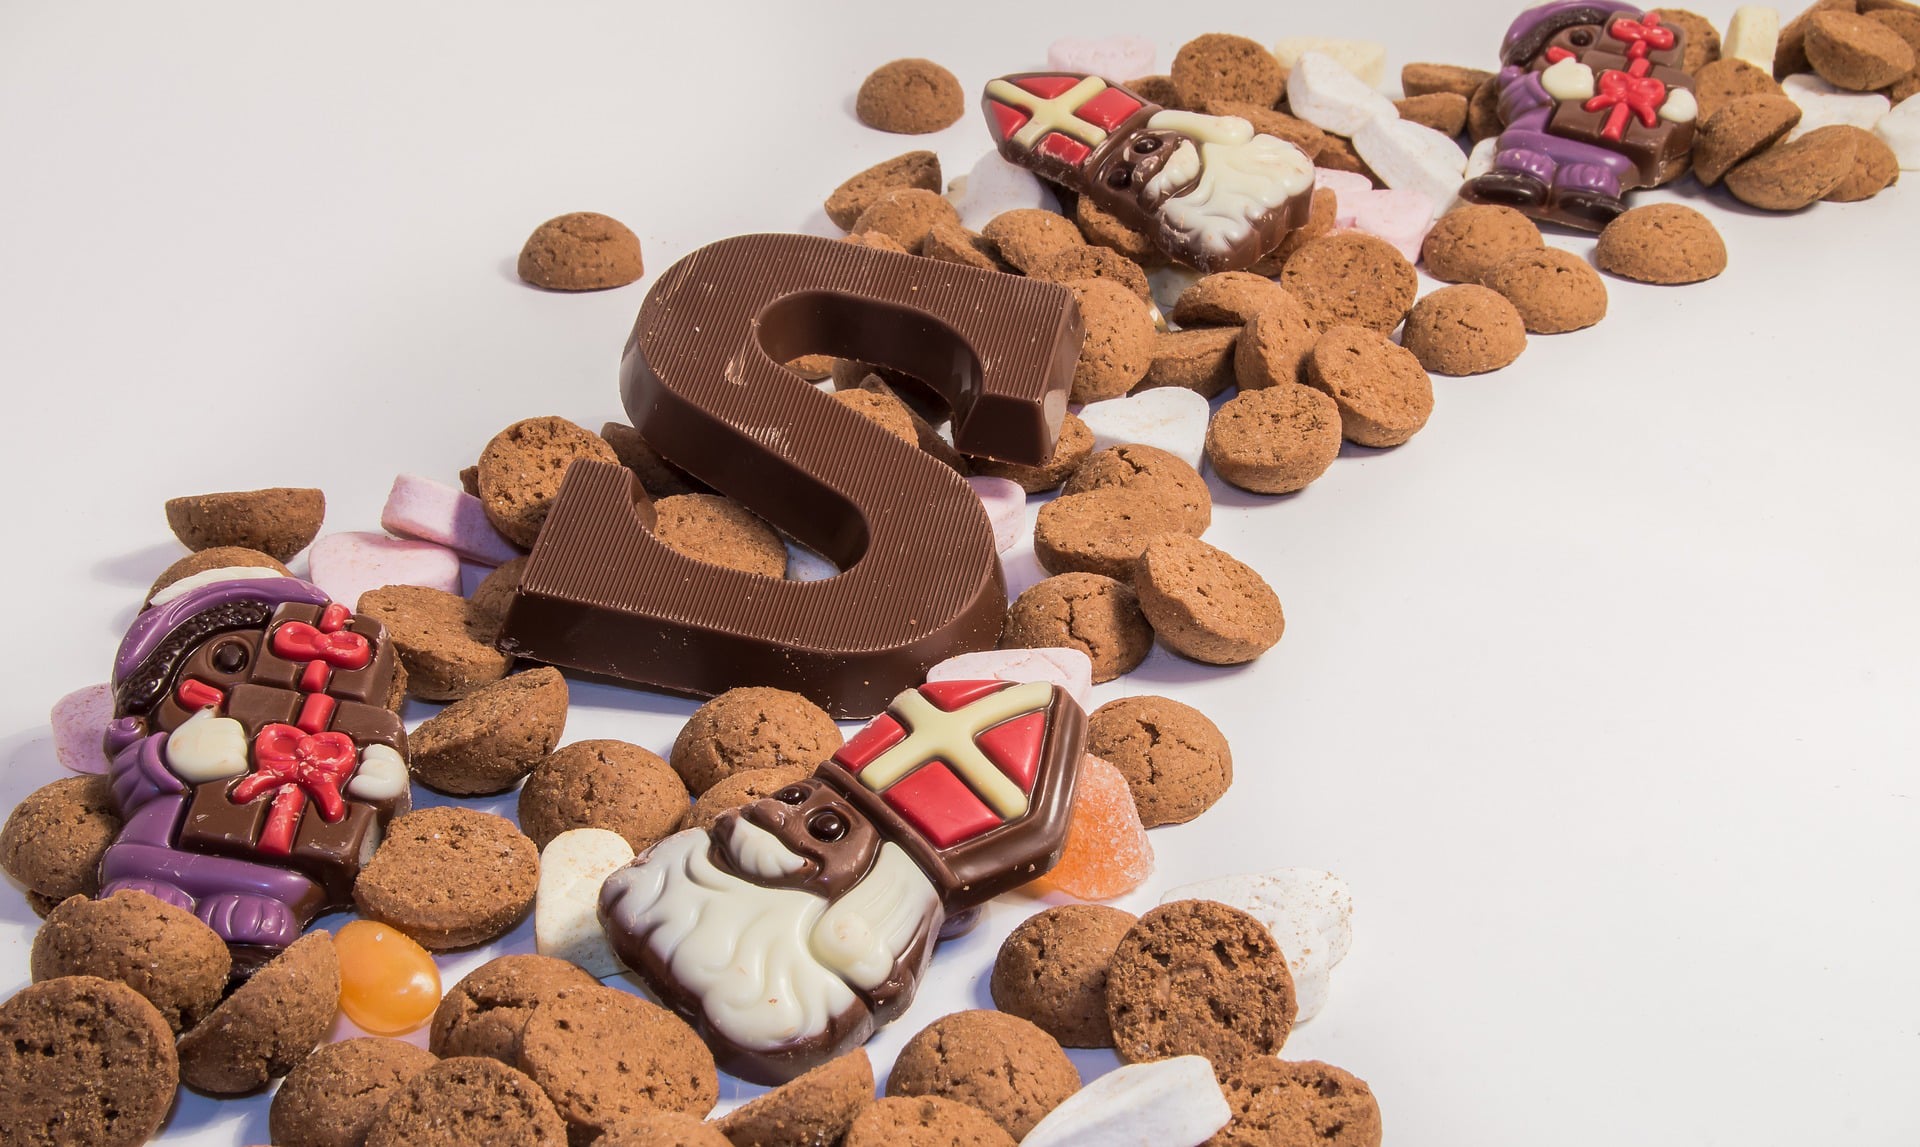 Promotie verdediging Spruit Wie verras jij met Sinterklaas snoepgoed? | 123 Cadeau idee.nl